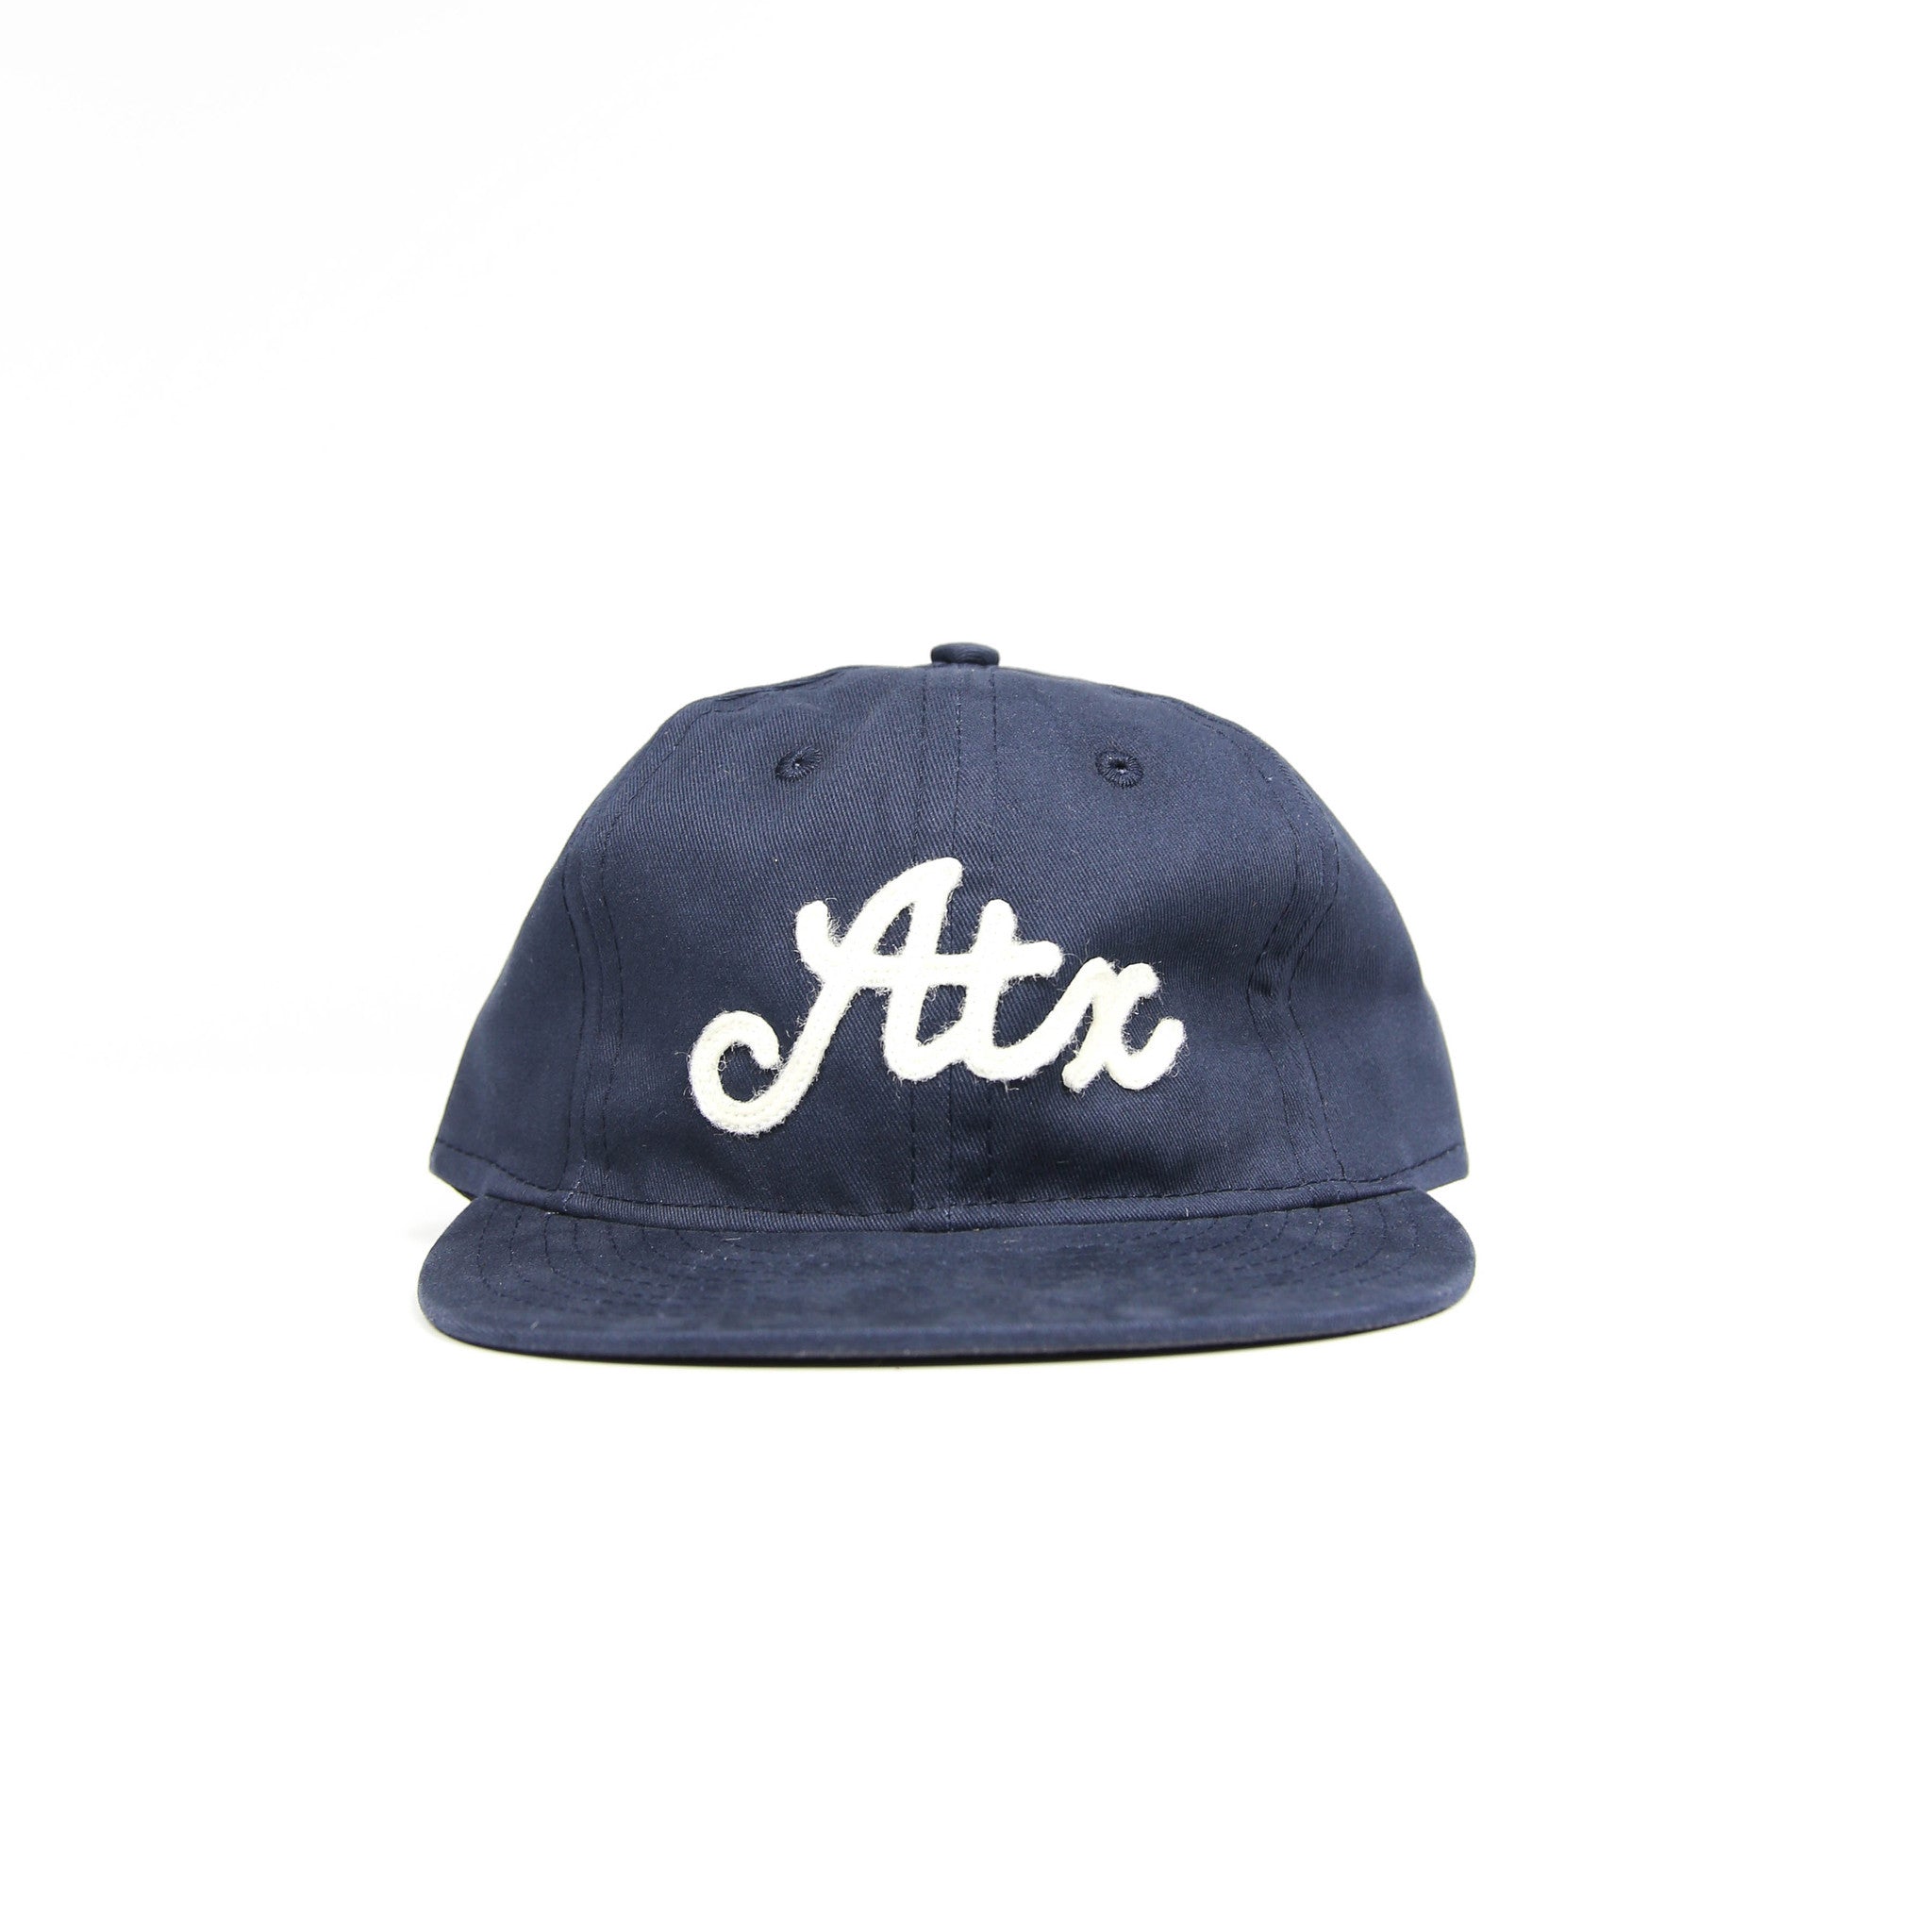 ATX Hat - Navy & Cream